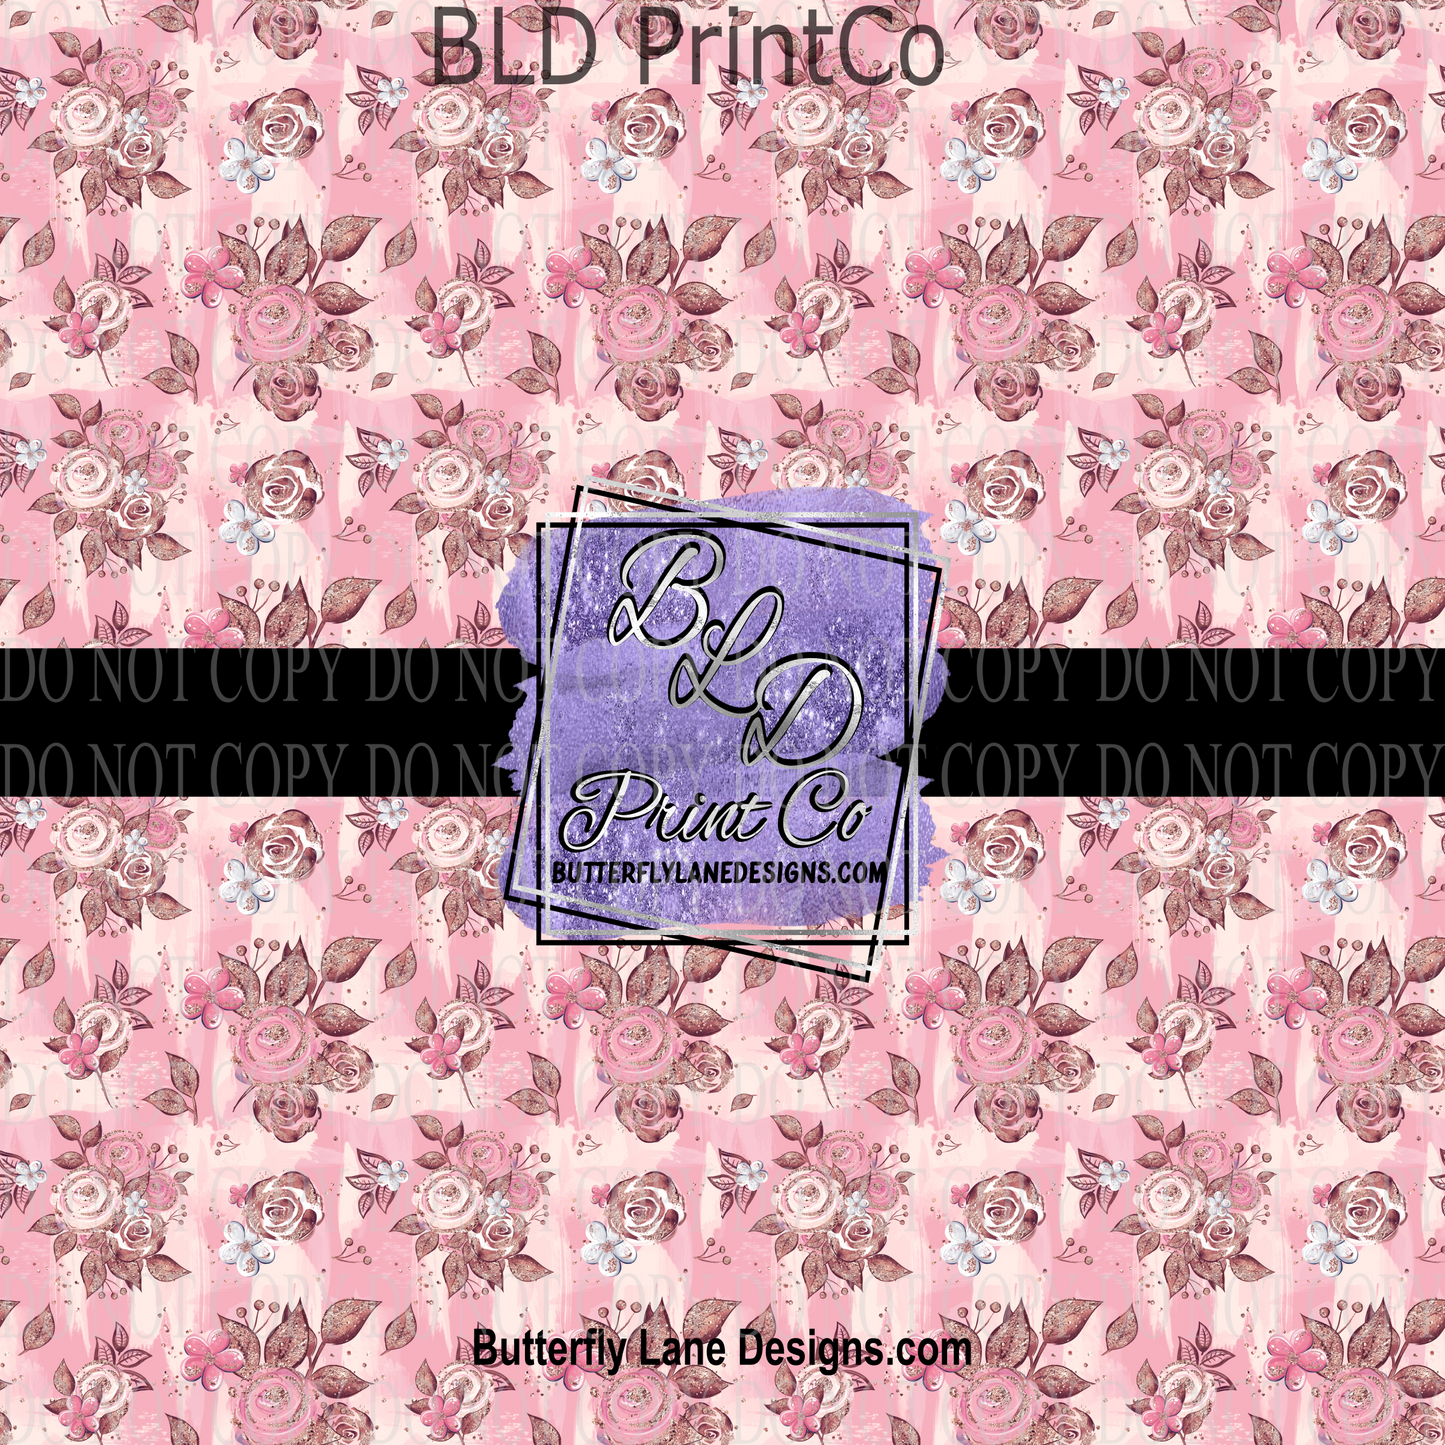 Roses Pink tones 2   PV 841  Patterned Vinyl